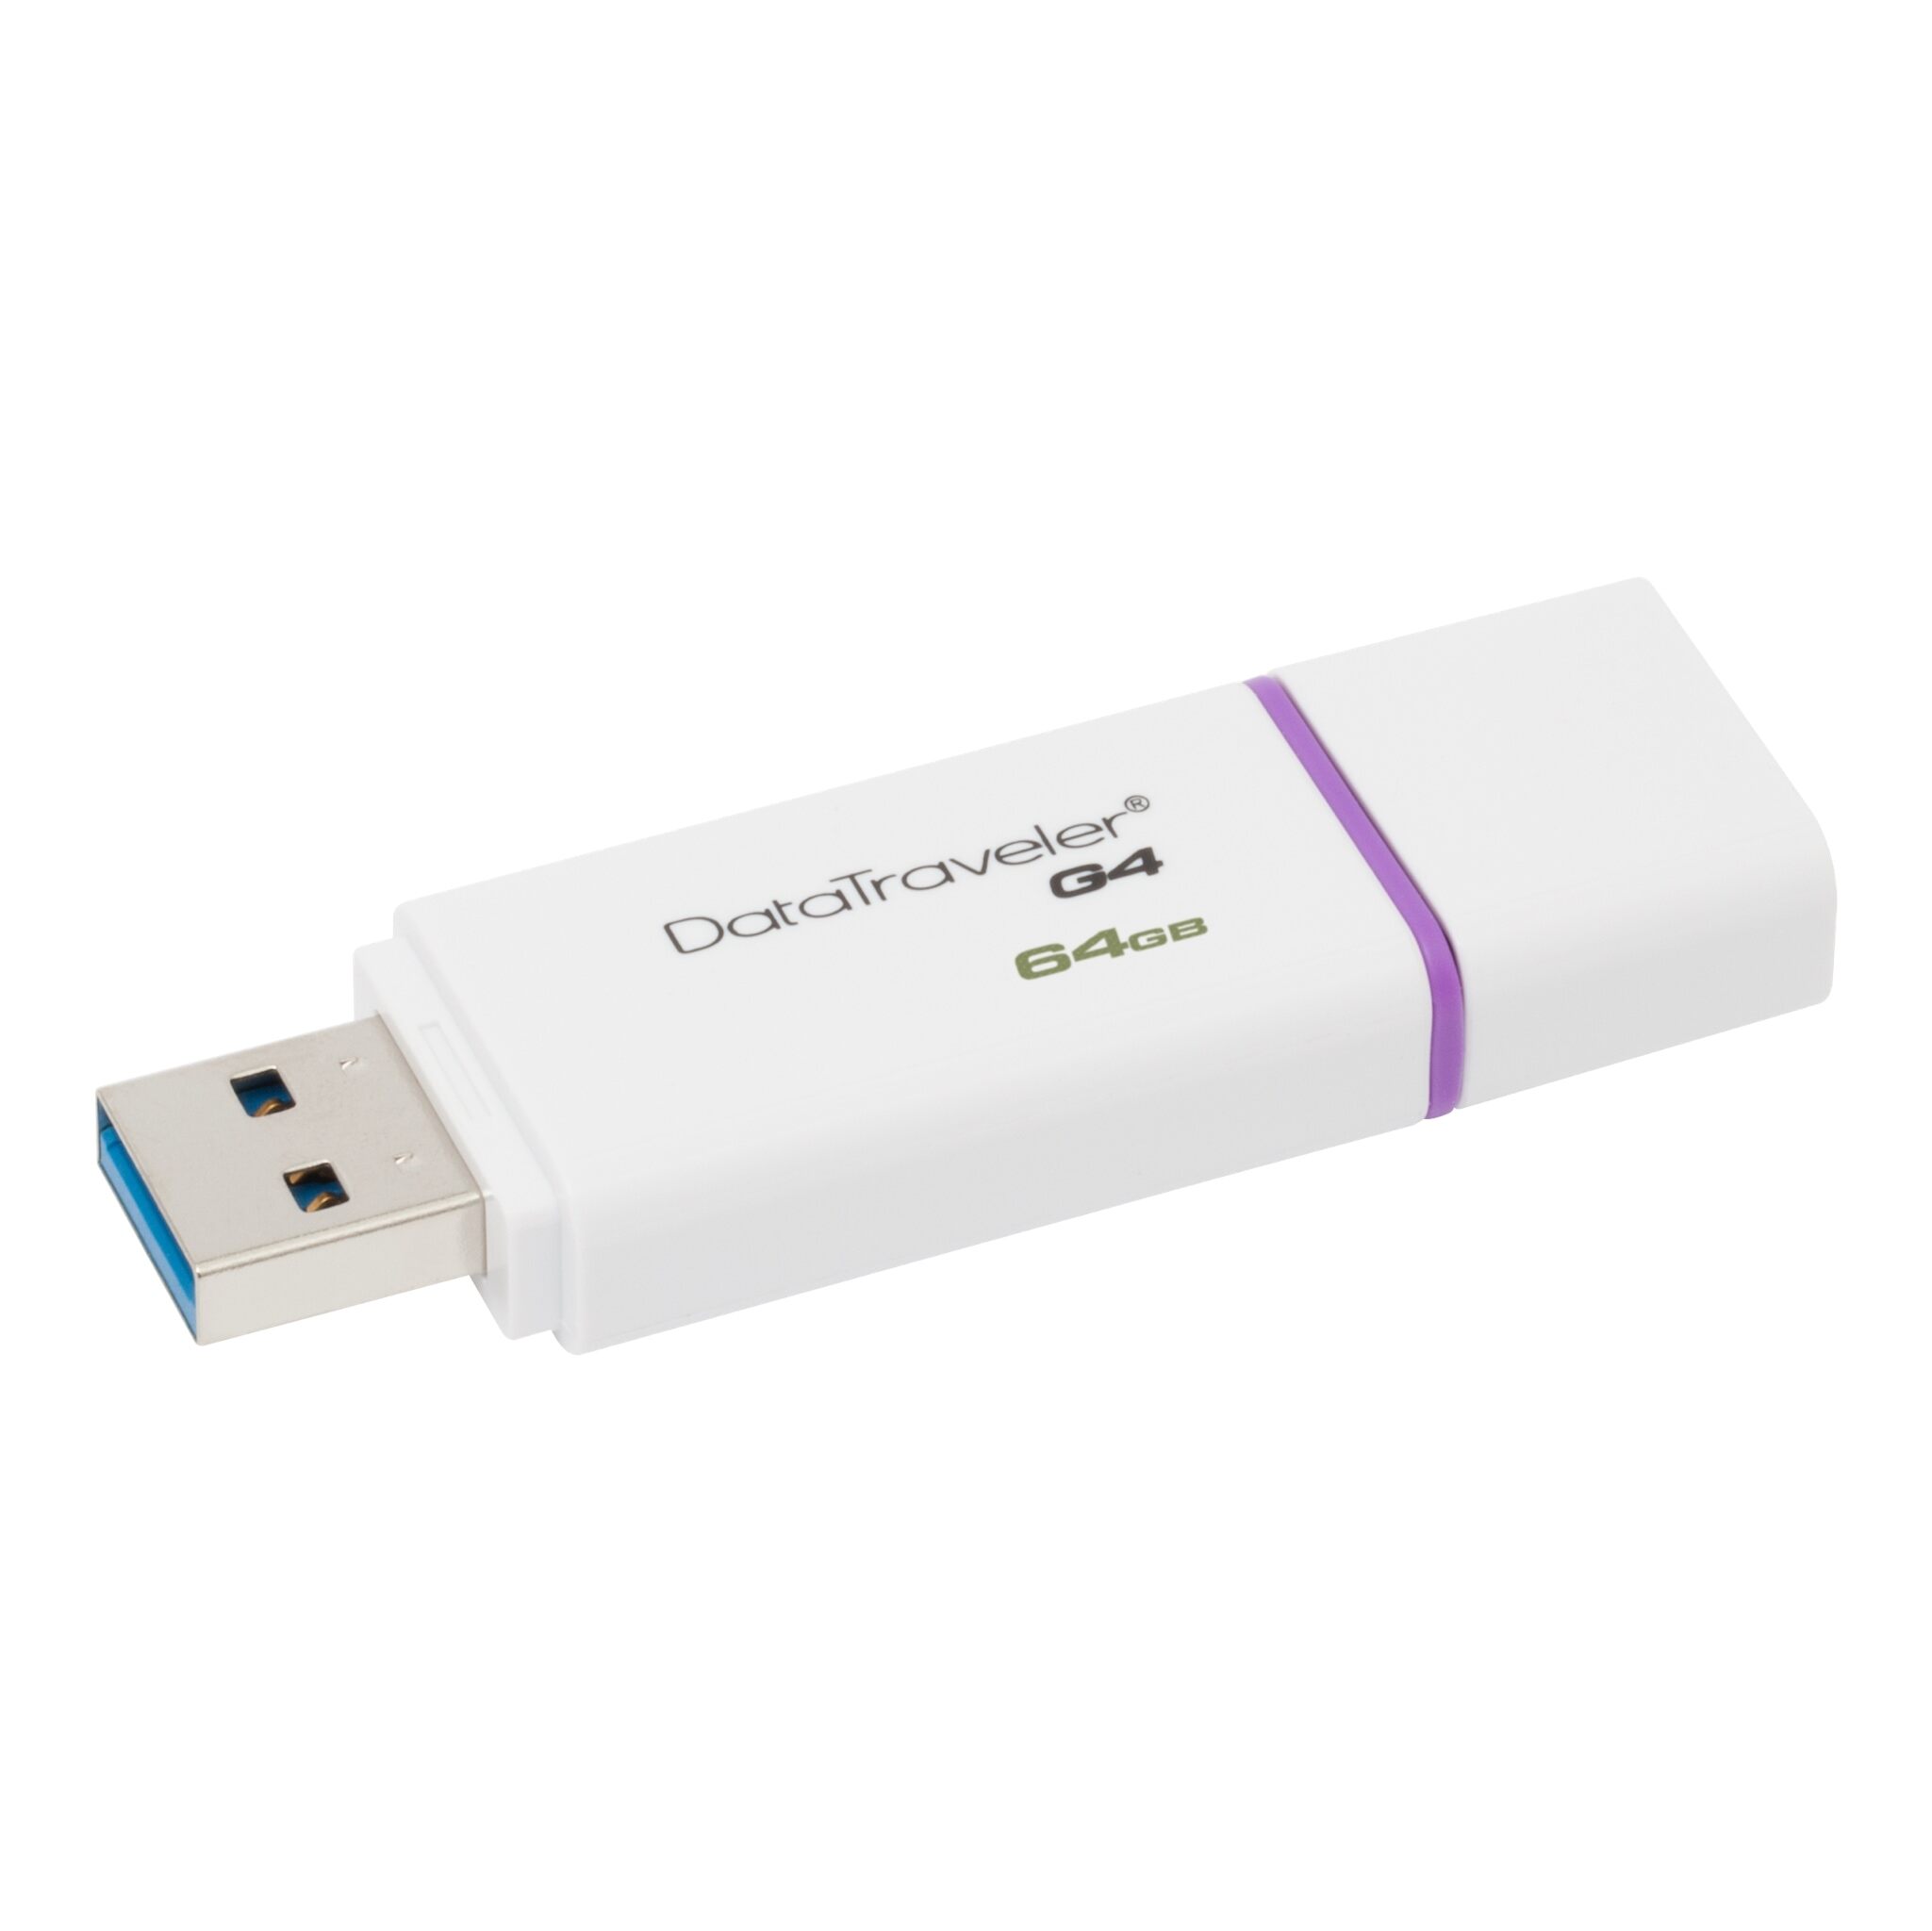 Kingston DataTraveler G4 16GB/32GB USB 3.0 Flash Drive DTIG4 (16GB / 32GB / 64GB / 128GB) Pendrive